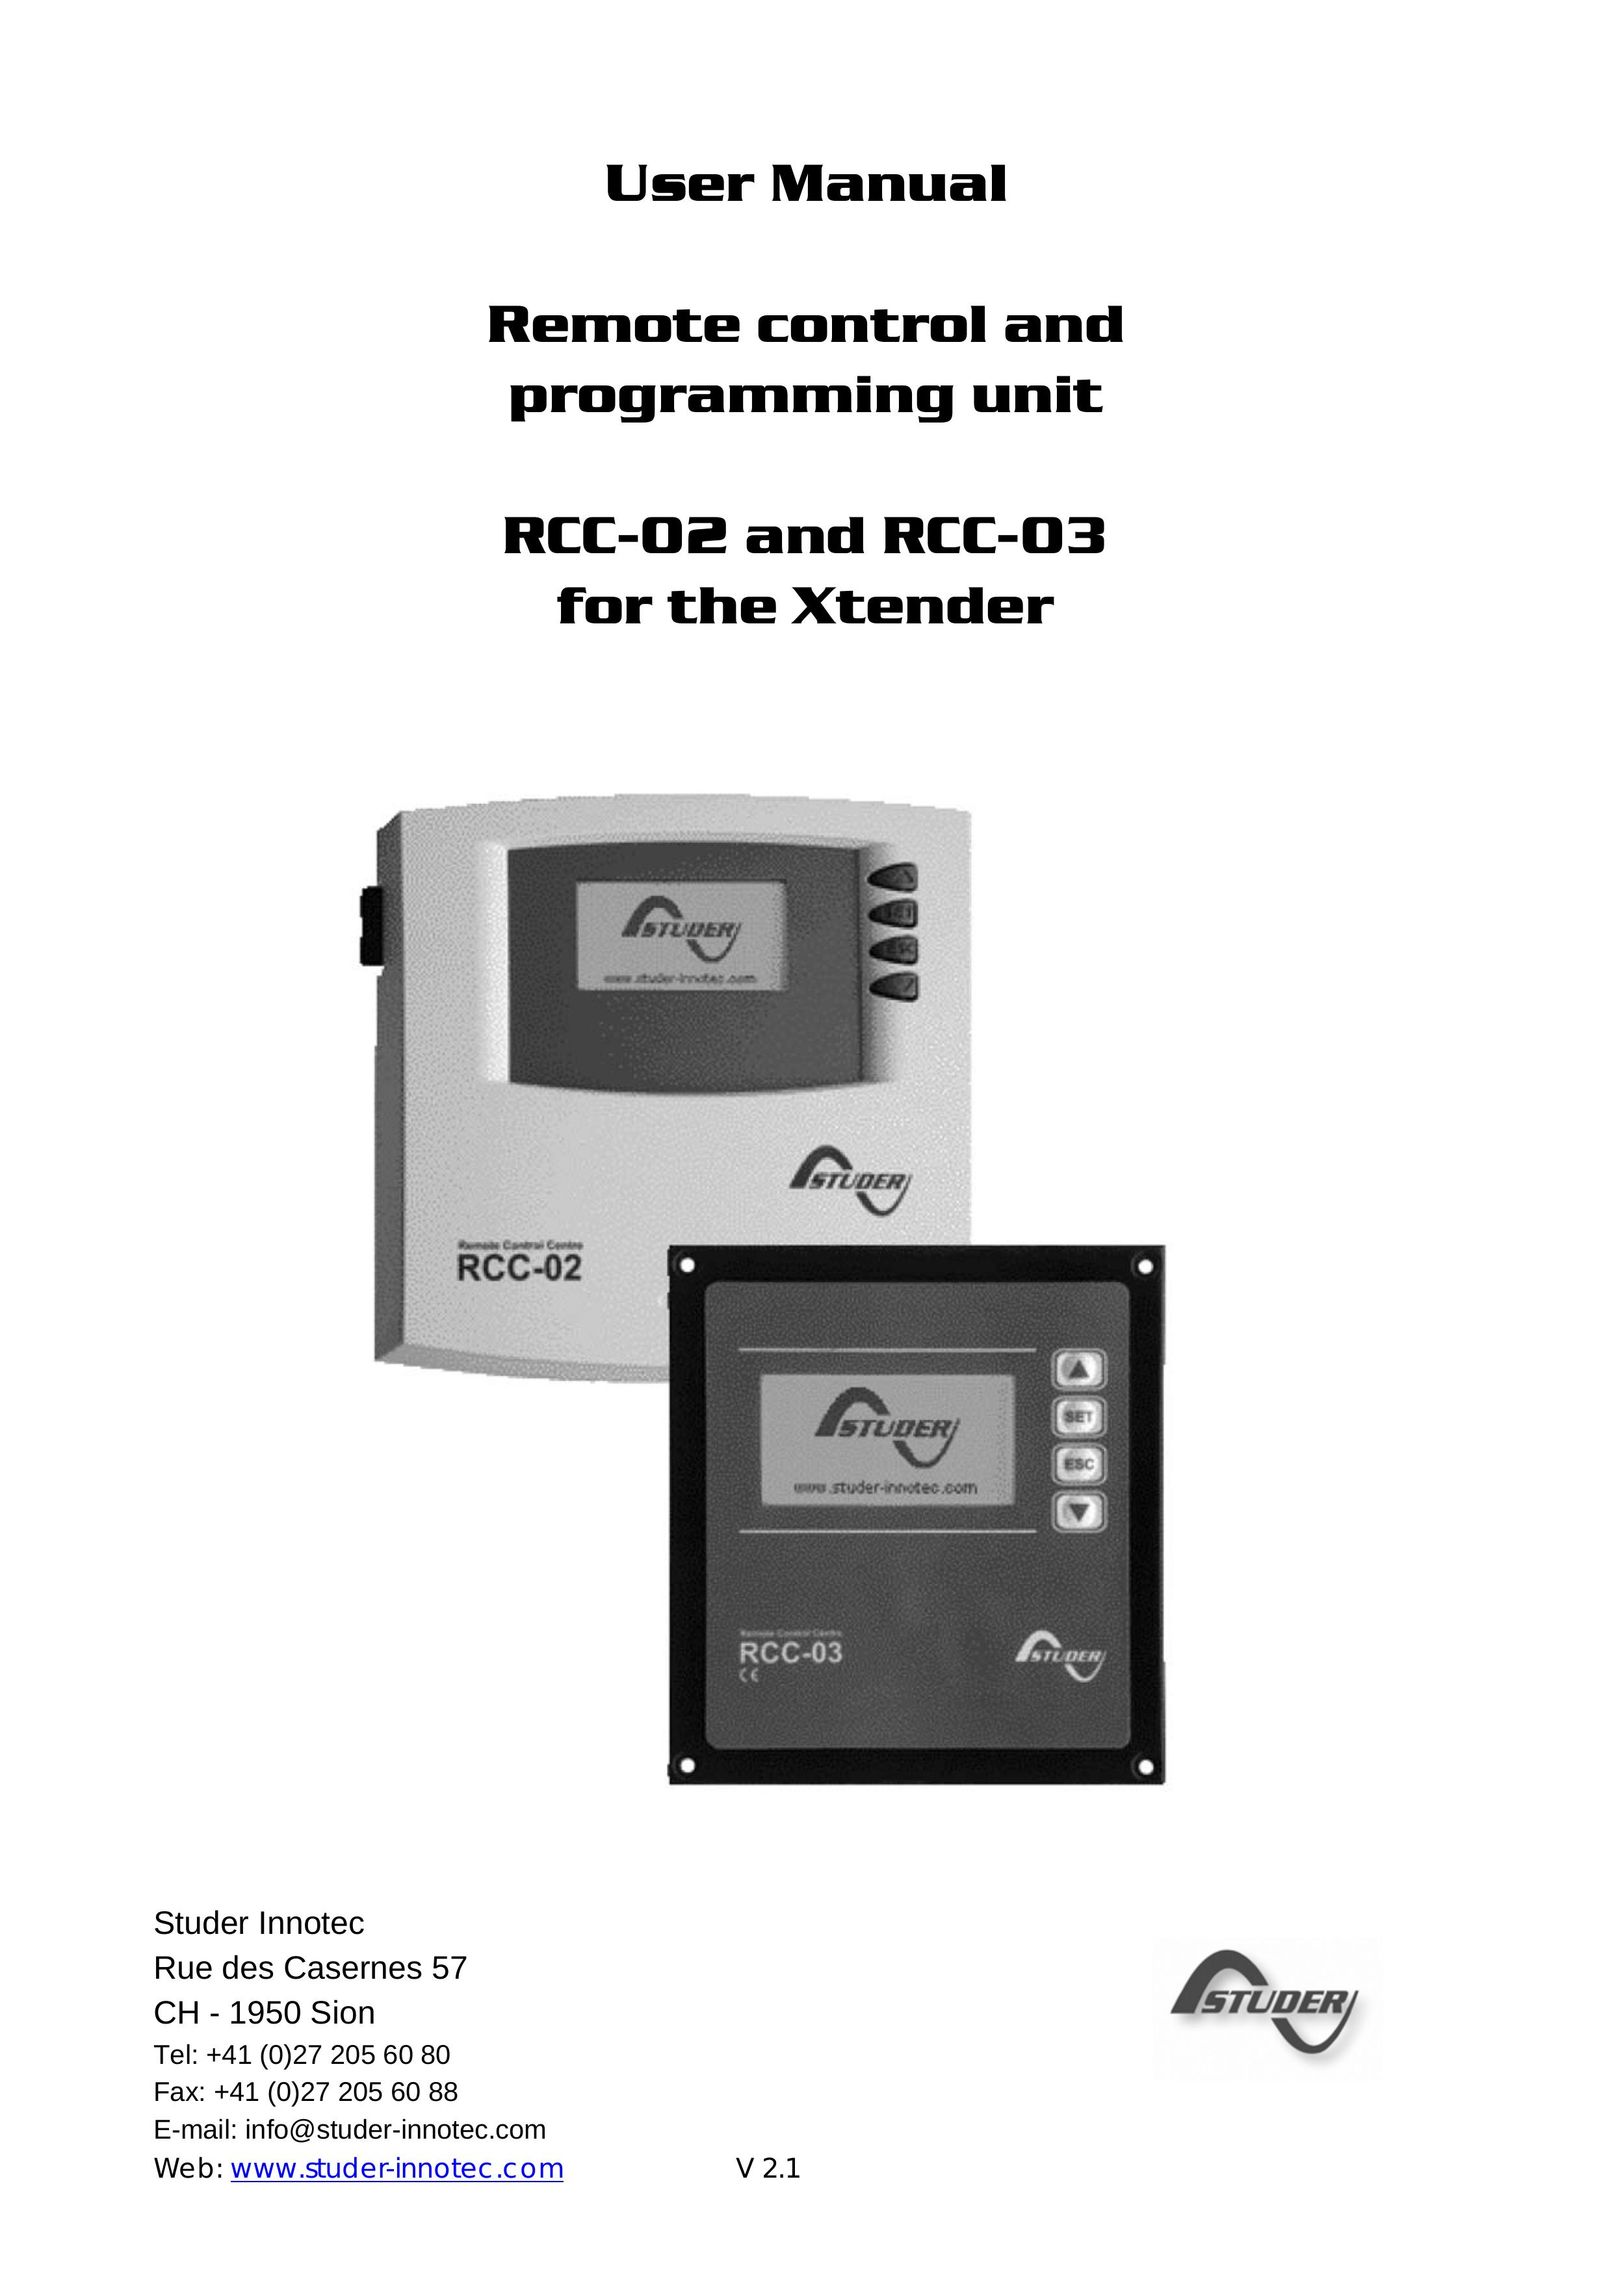 Studer Innotec RCC-03 Universal Remote User Manual